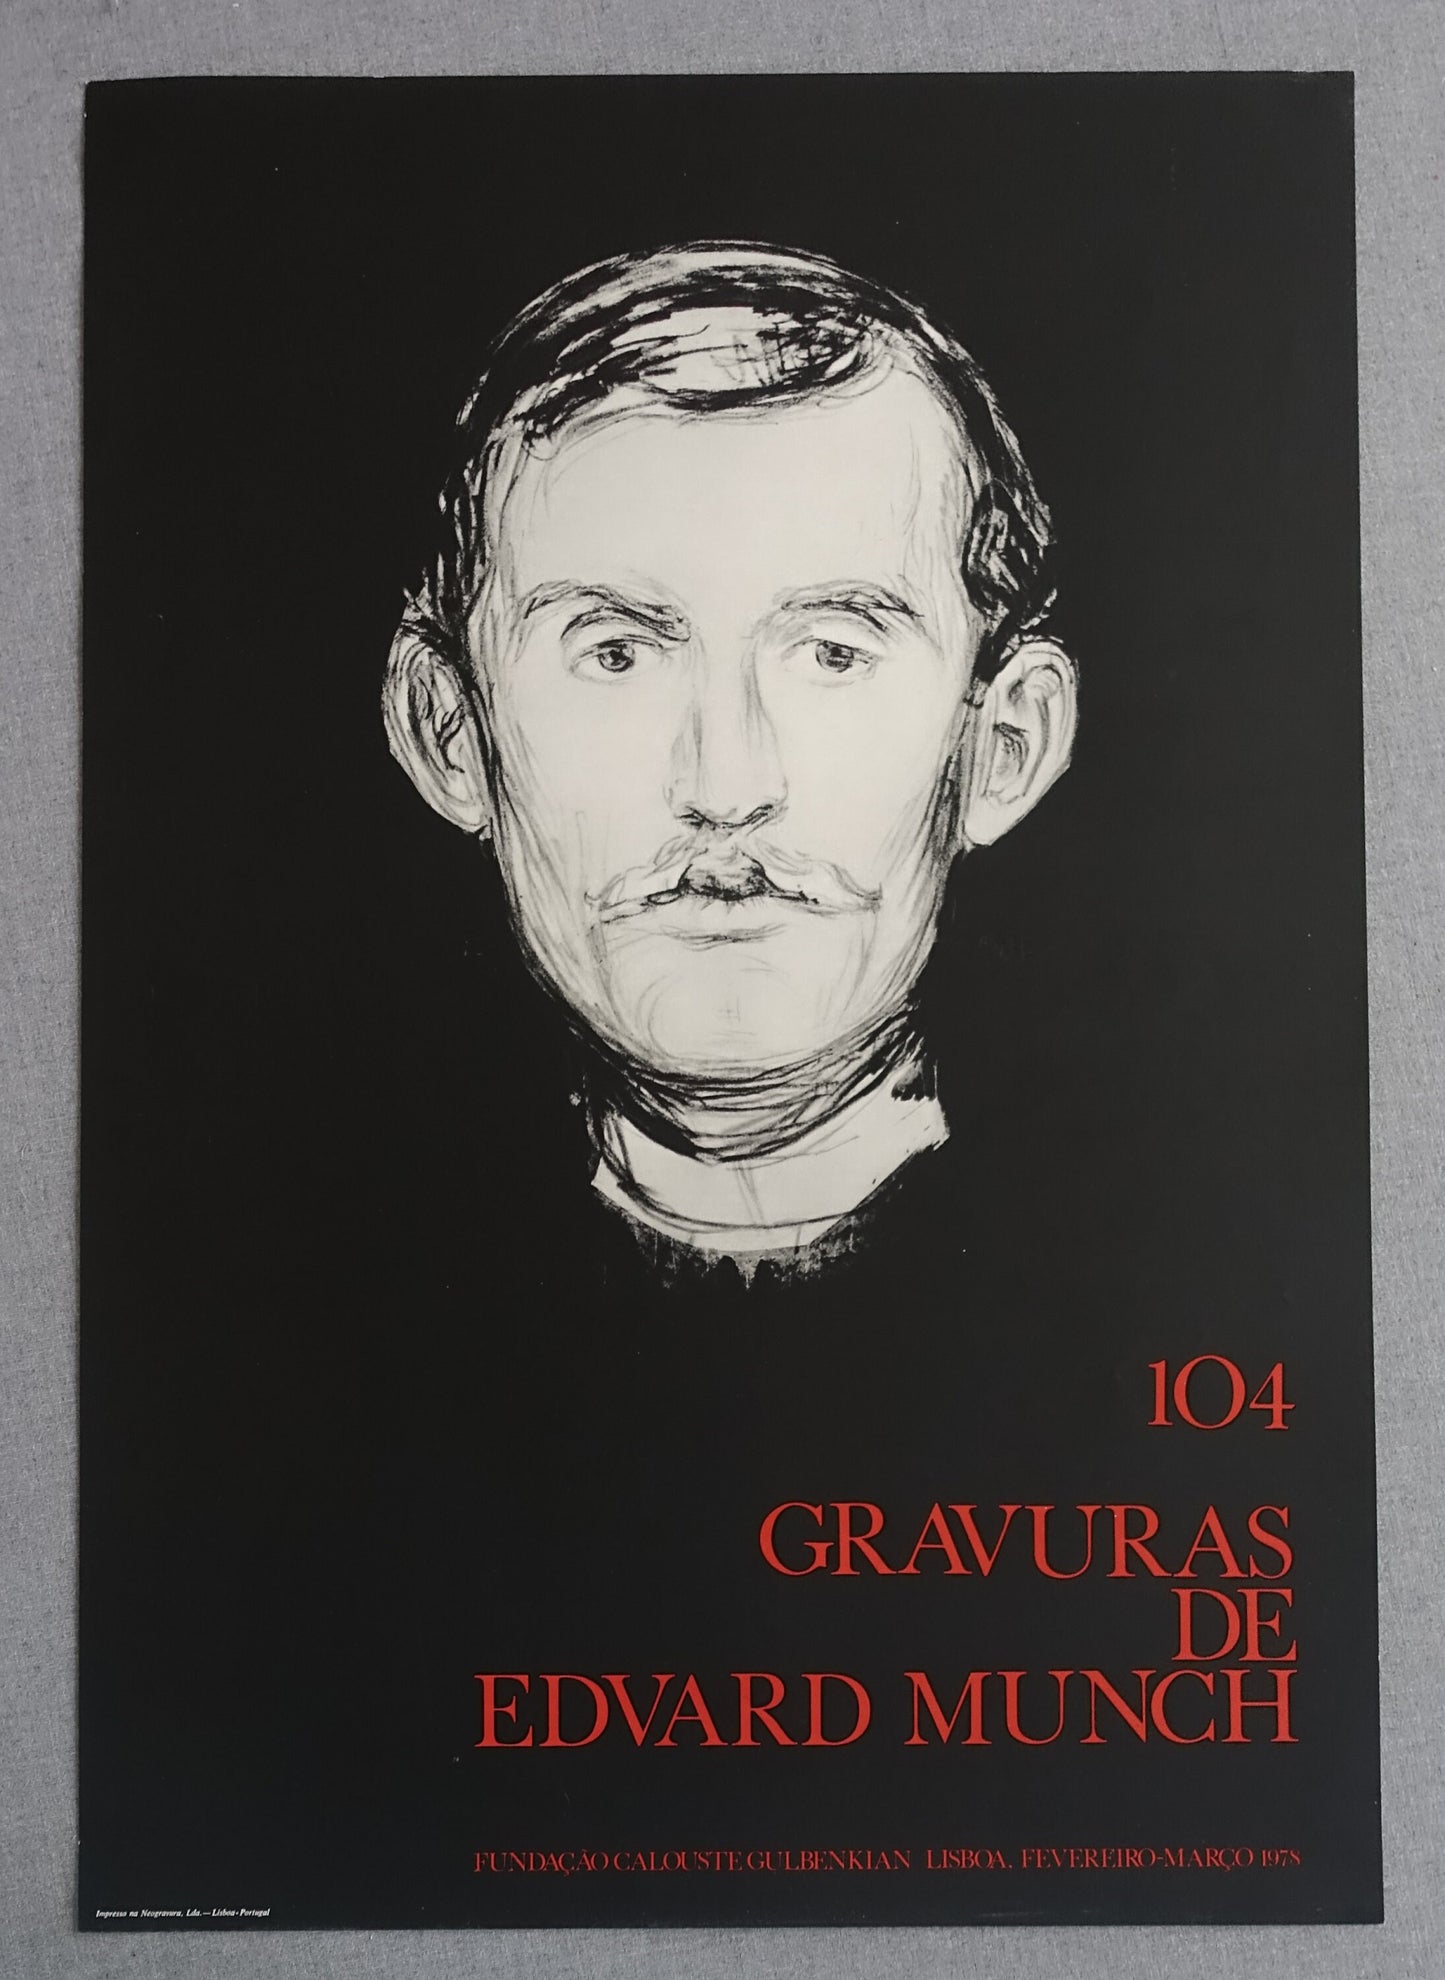 1978 Edvard Munch Exhibition Calouste Gulbenkian Foundation - Original Vintage Poster